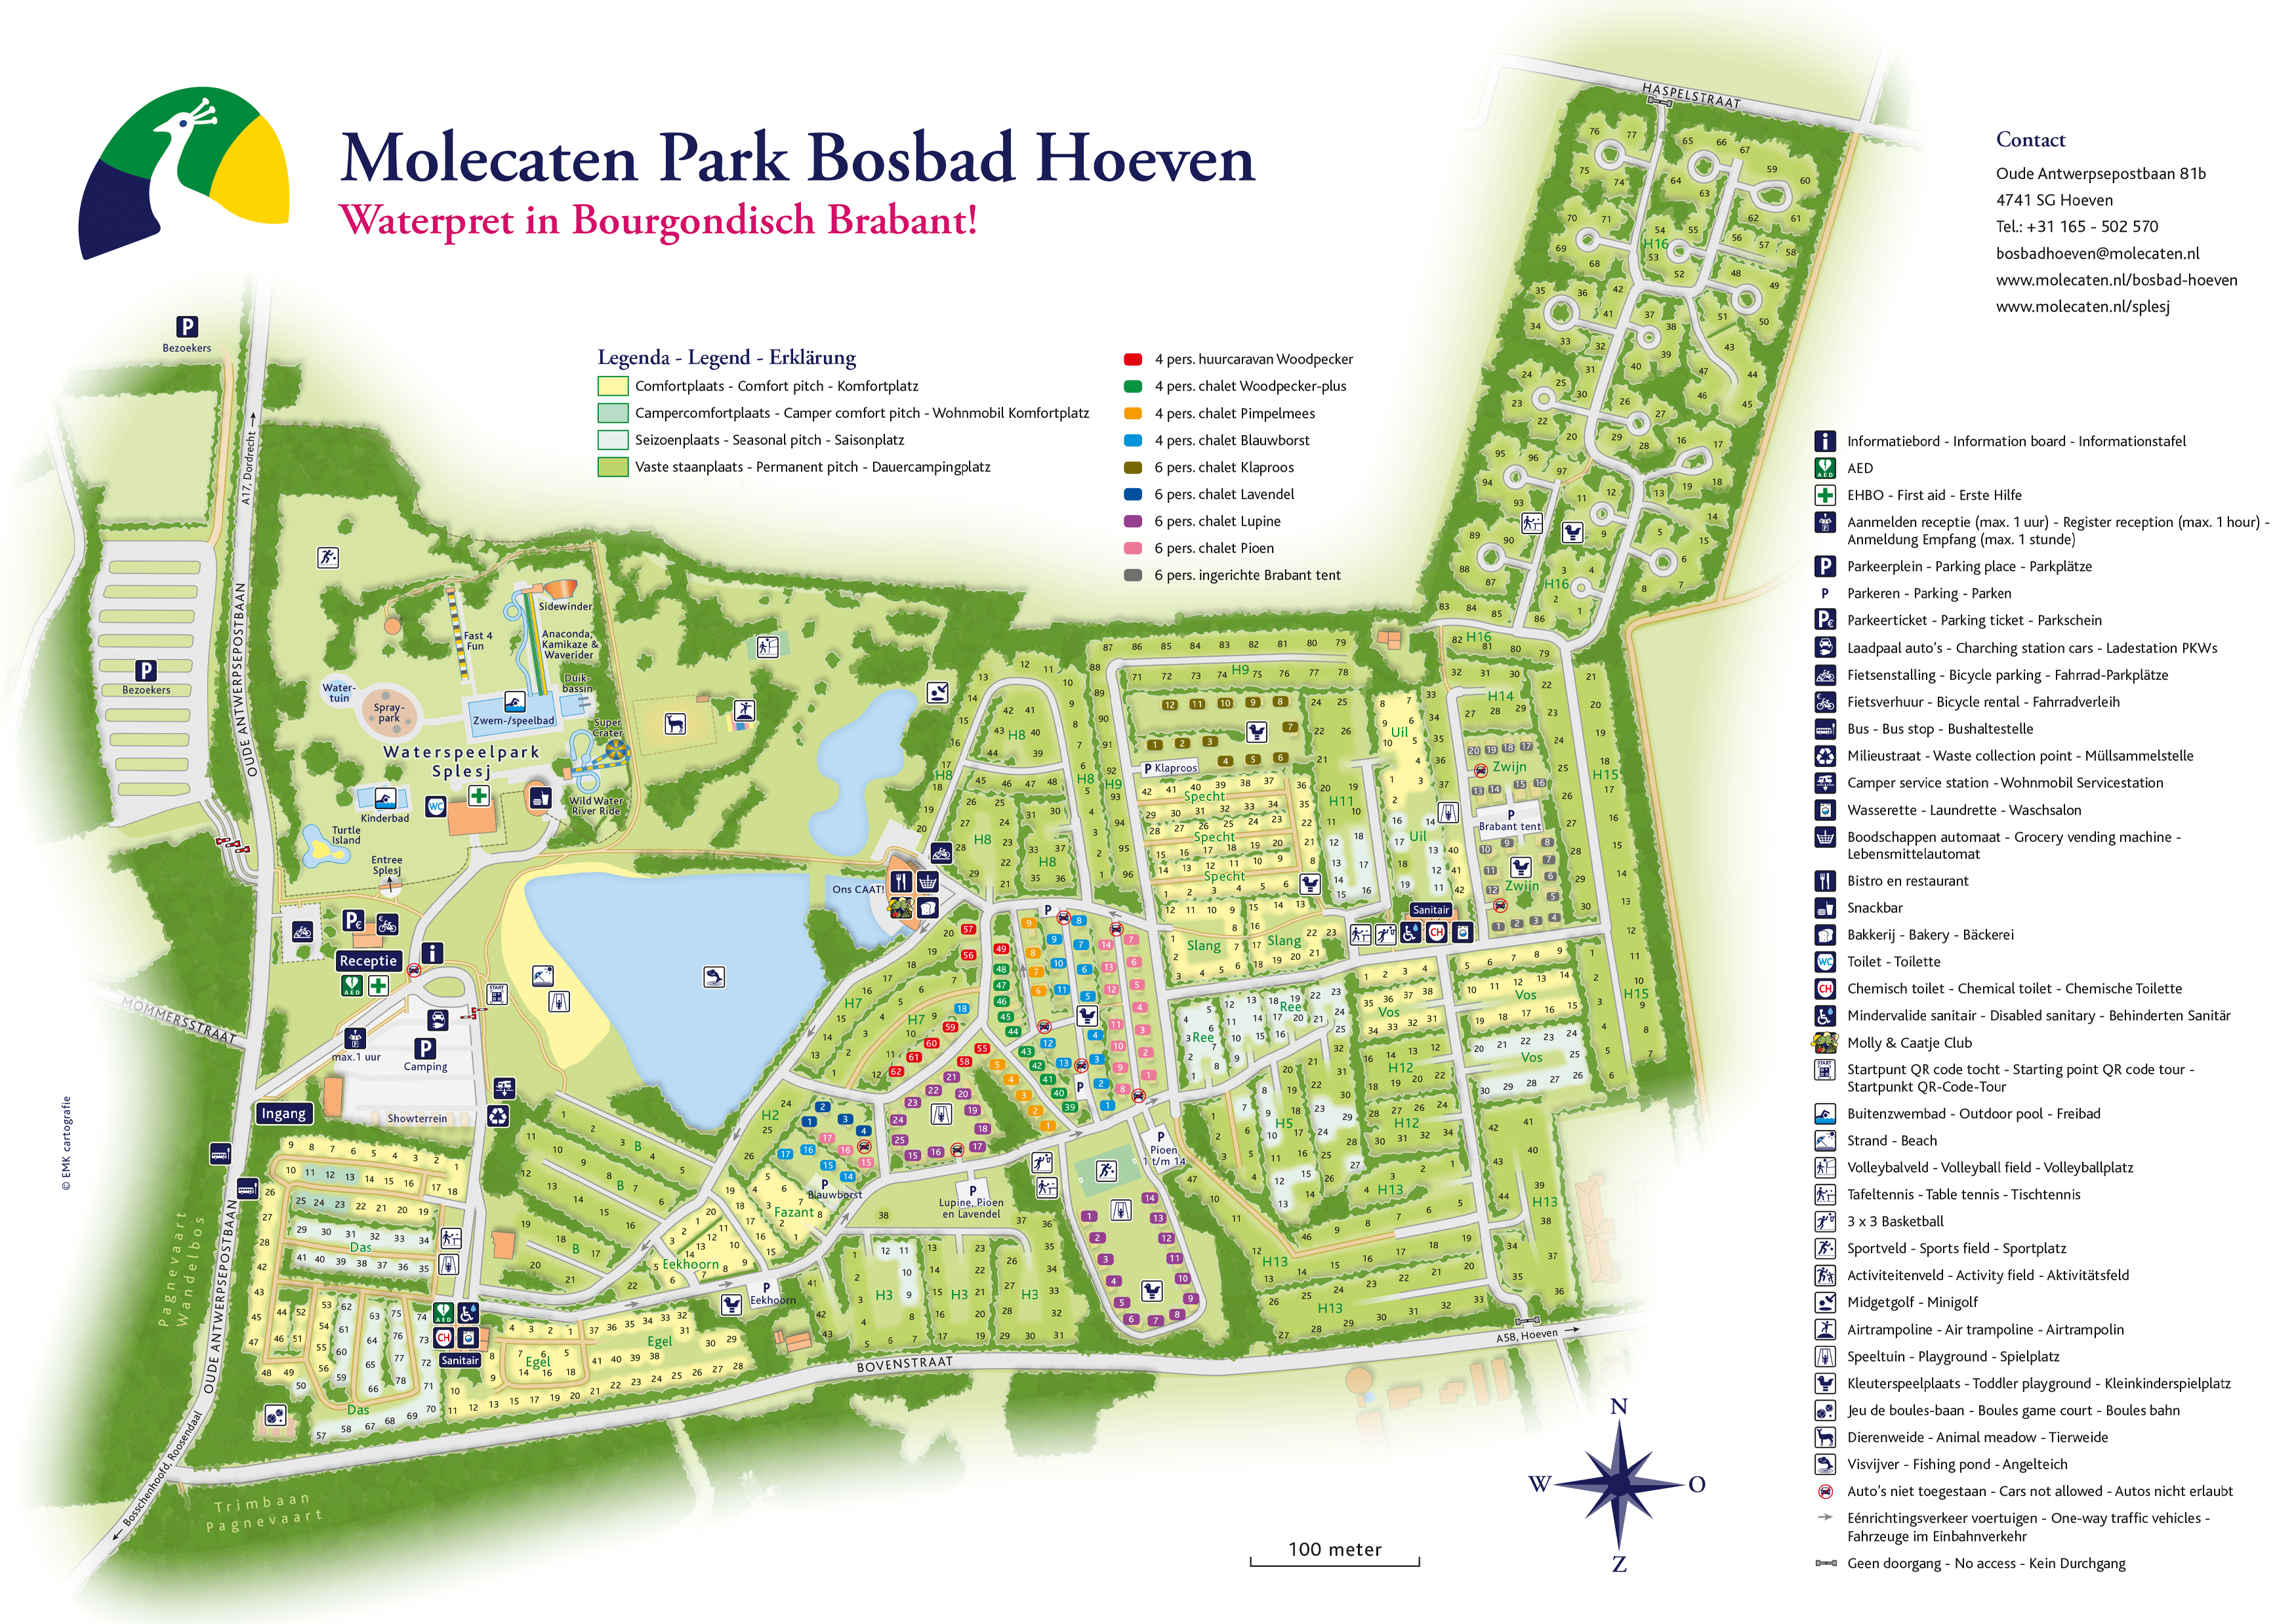 Molecaten Park Bosbad Hoeven accommodation.parkmap.alttext